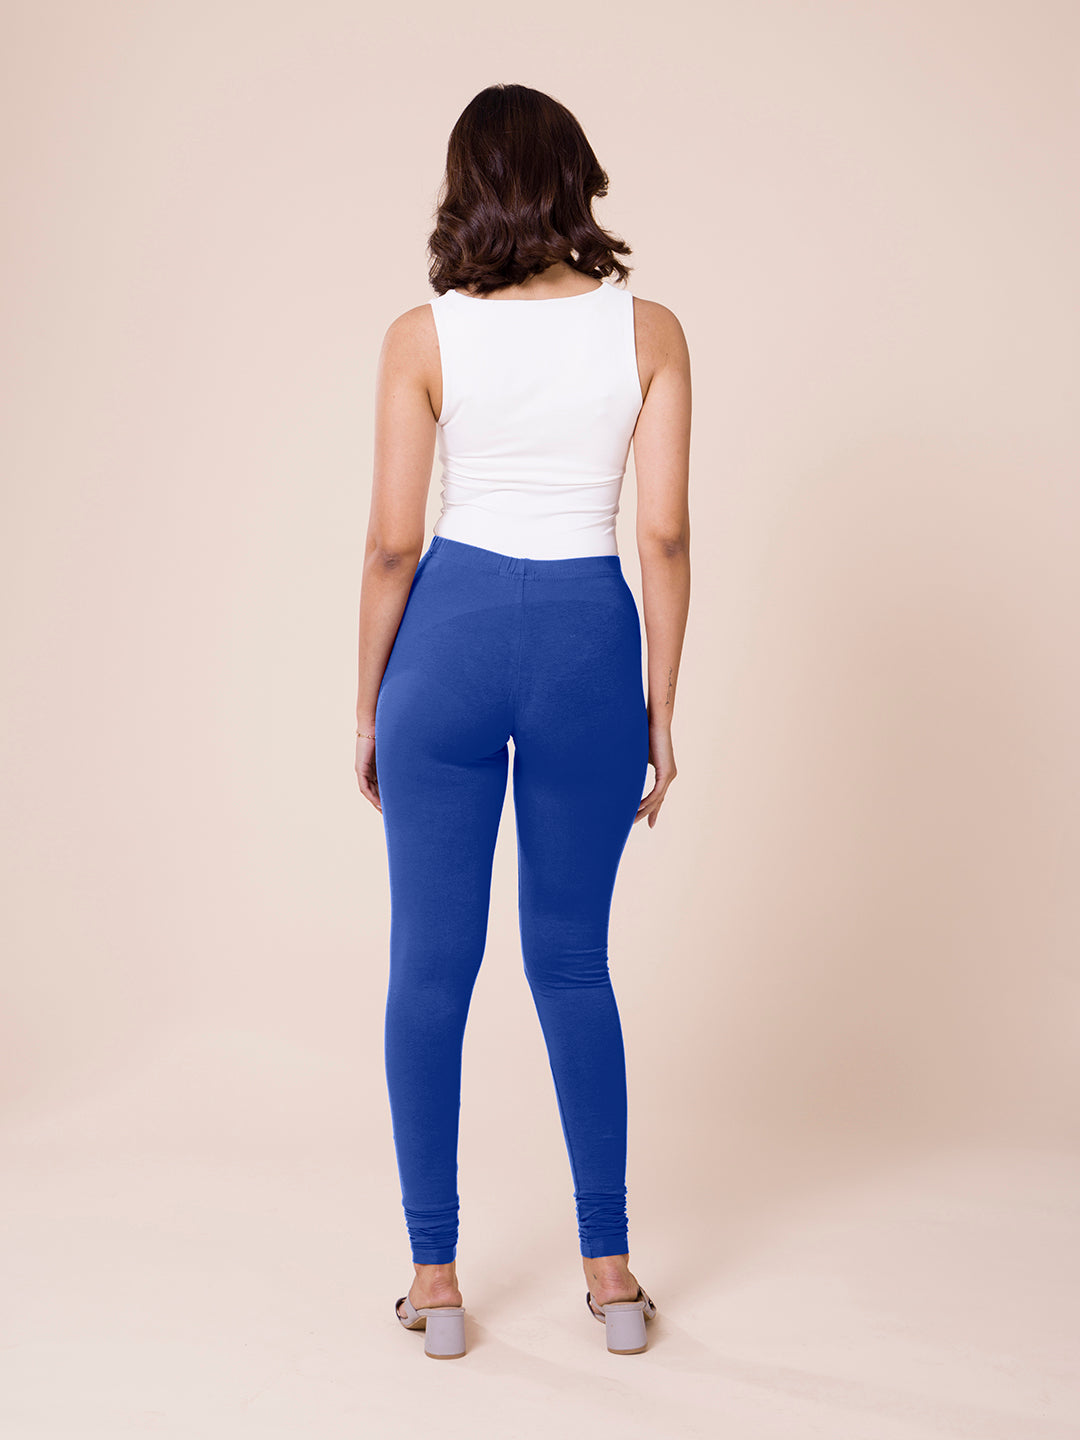 Plain Ladies Royal Blue Churidar Cotton Leggings, Size: XL,XXL at